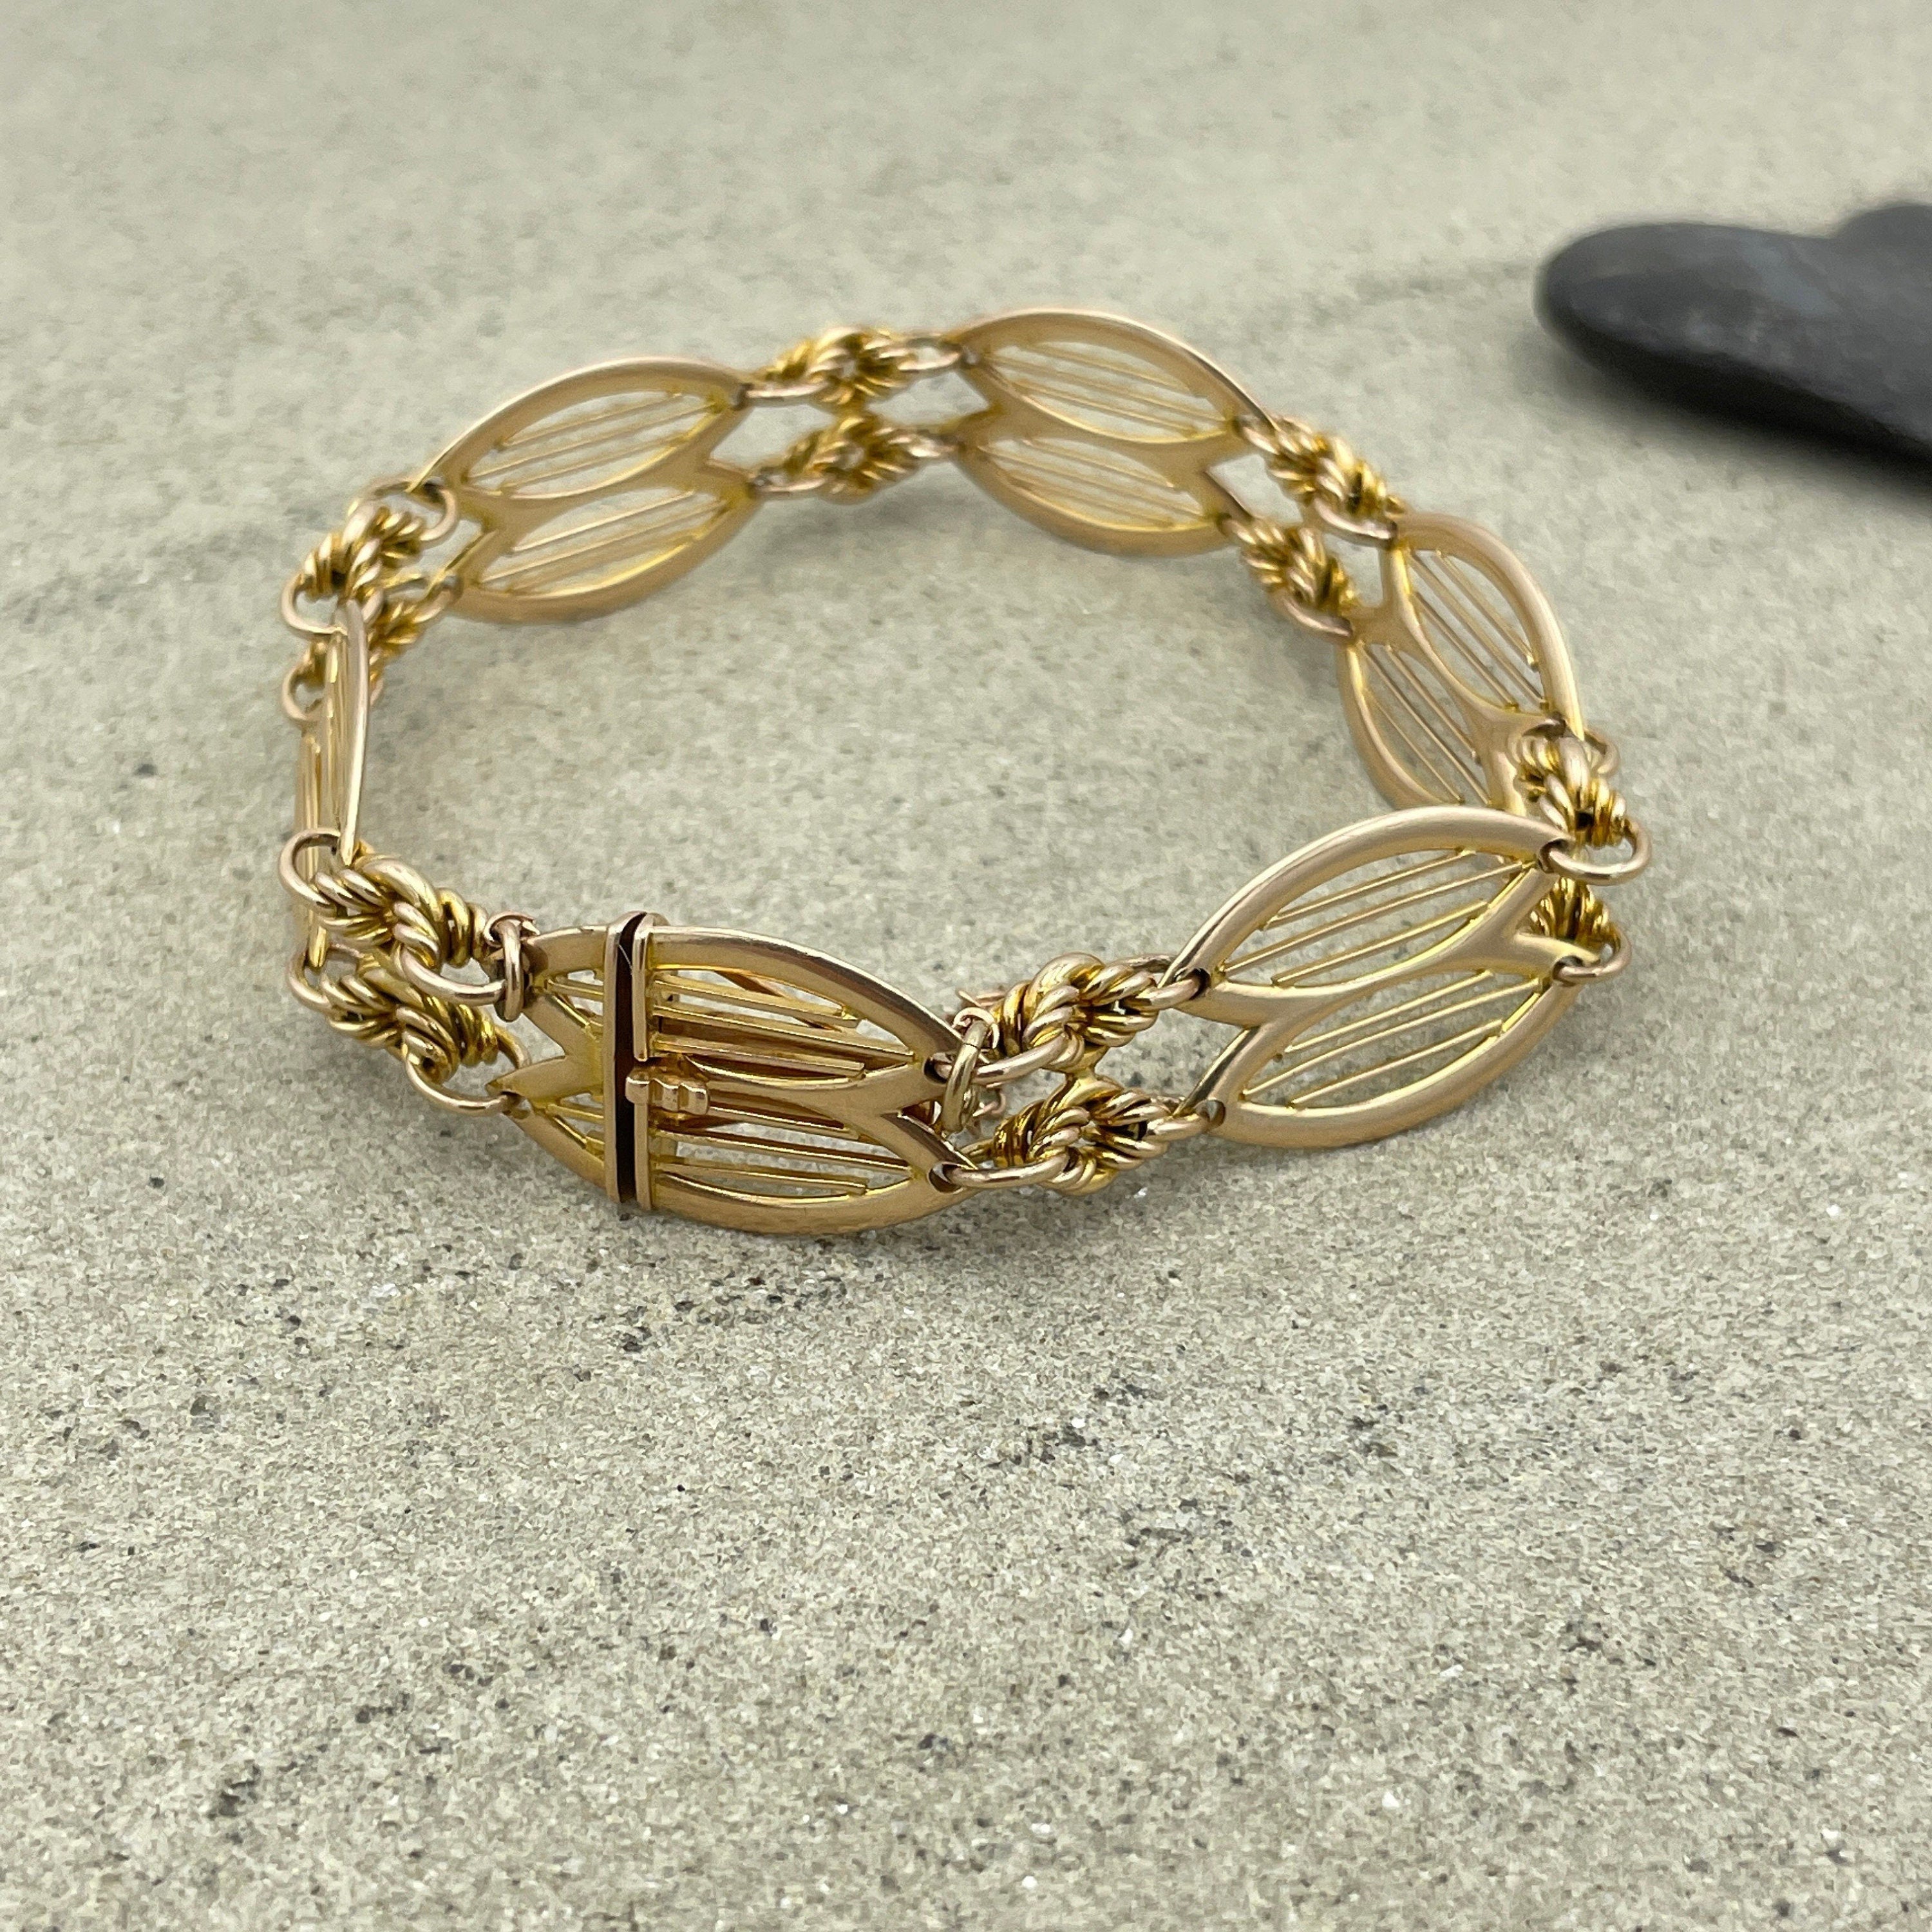 Antique 15ct Gold, Fancy Link, Lovers Knot Bracelet, 15.6 Grams